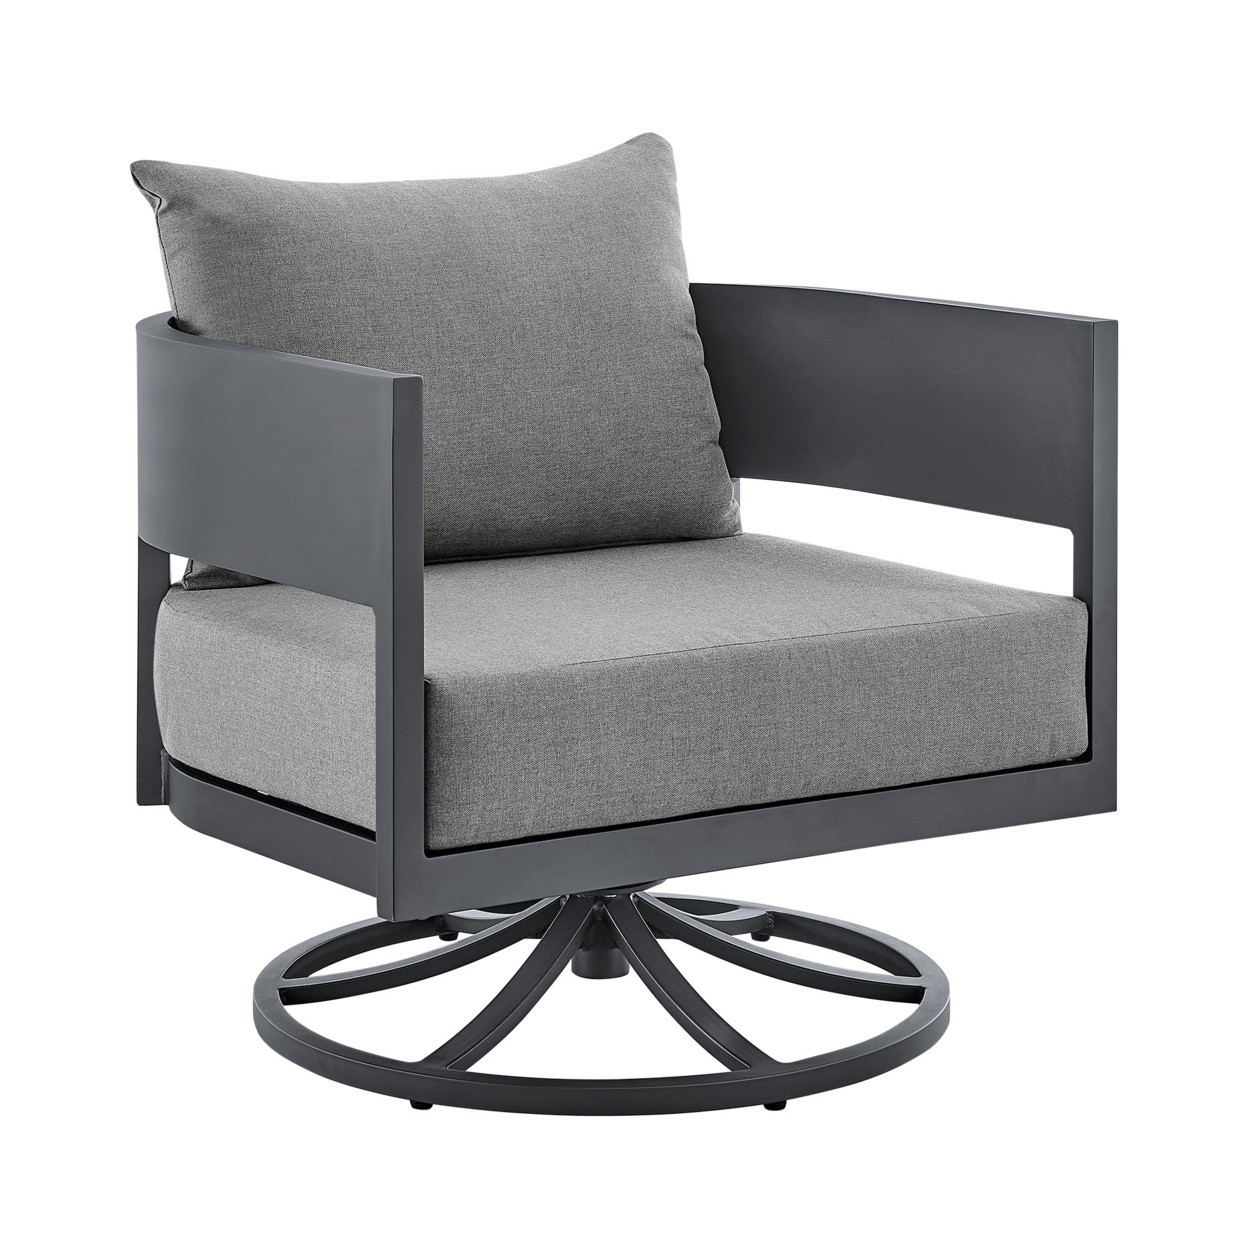 Jax 32 Inch Patio Swivel Chair, Gray Aluminum, Gray All Weather Cushions- Saltoro Sherpi